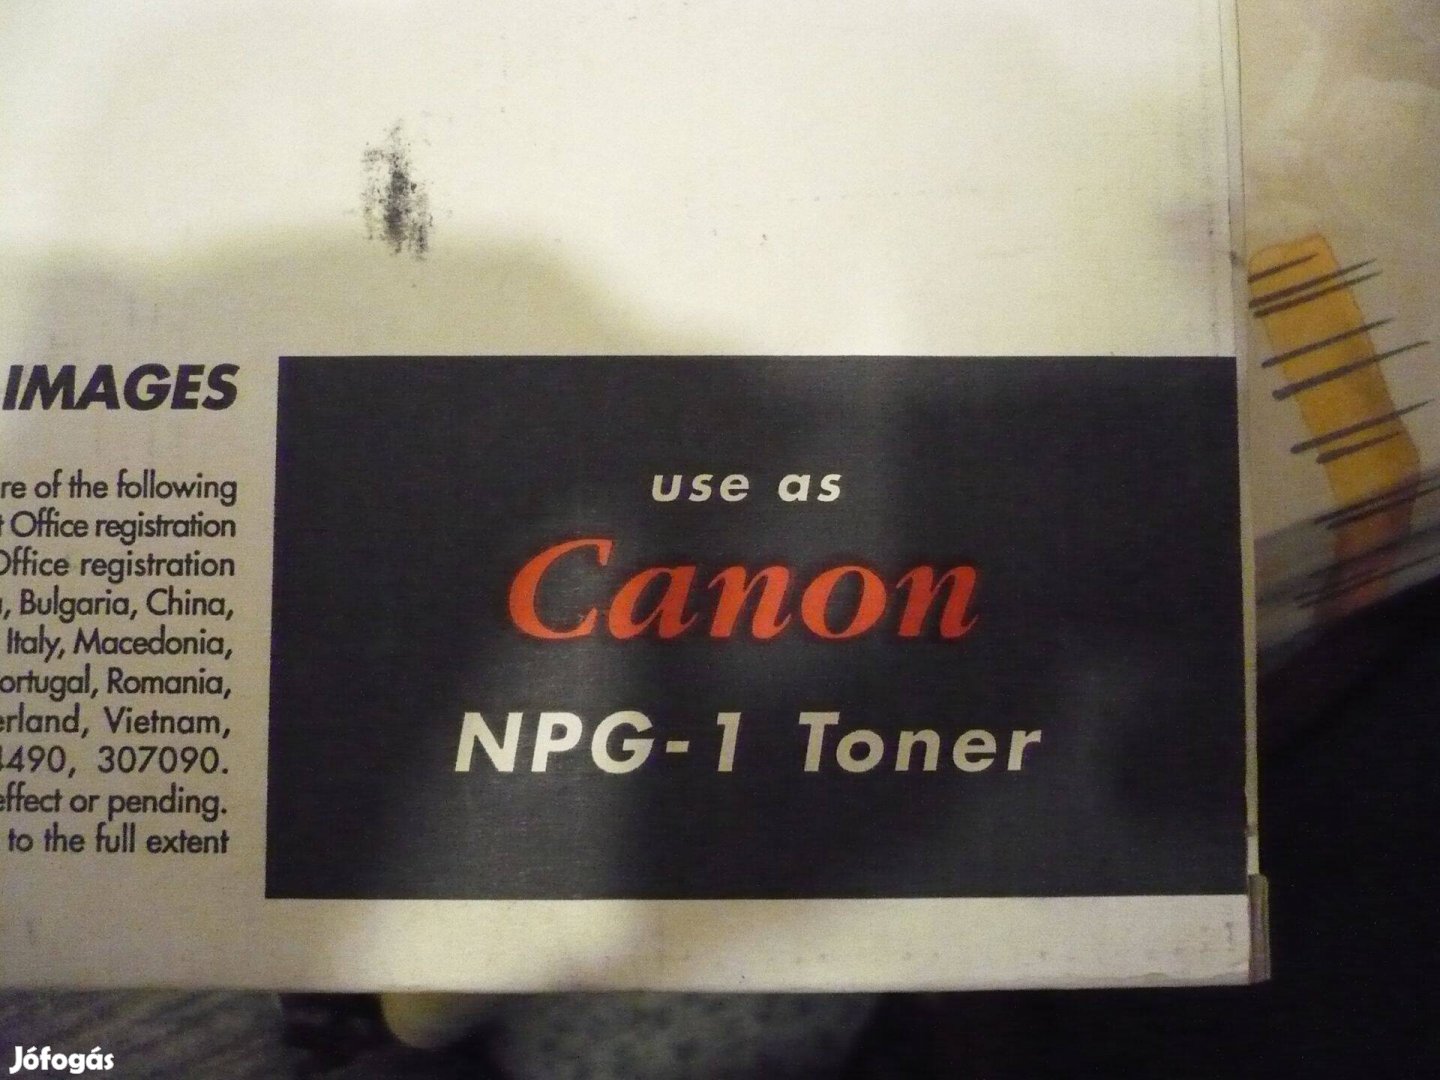 Canon NGP-1 Toner